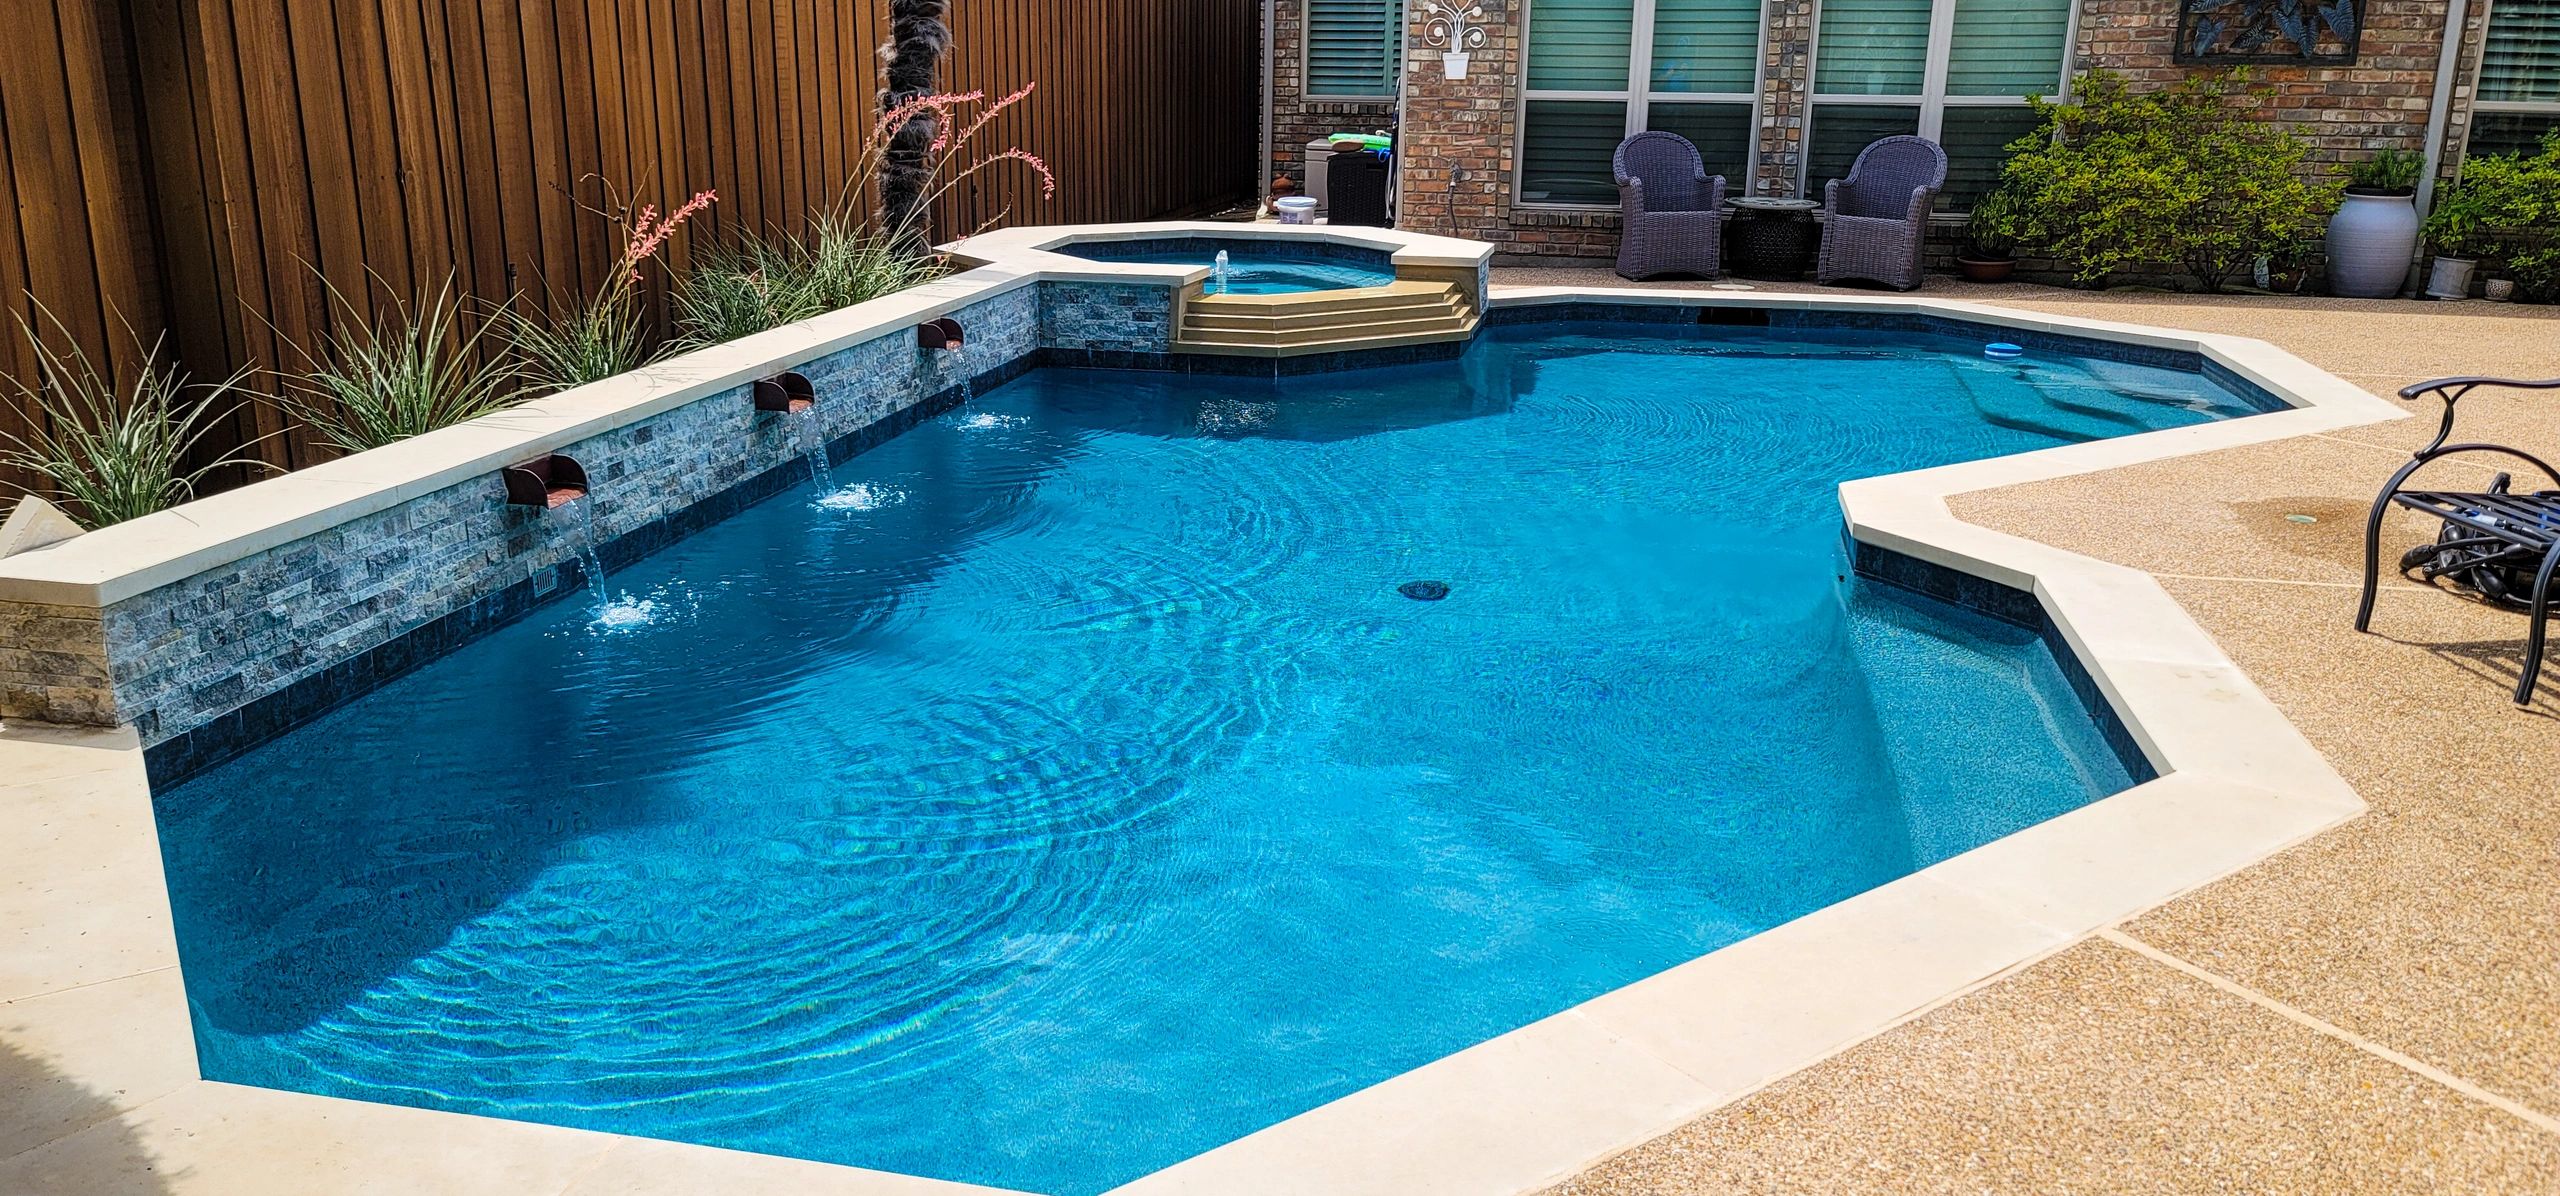 dallas richardson pool remodel 9 remodel your pool